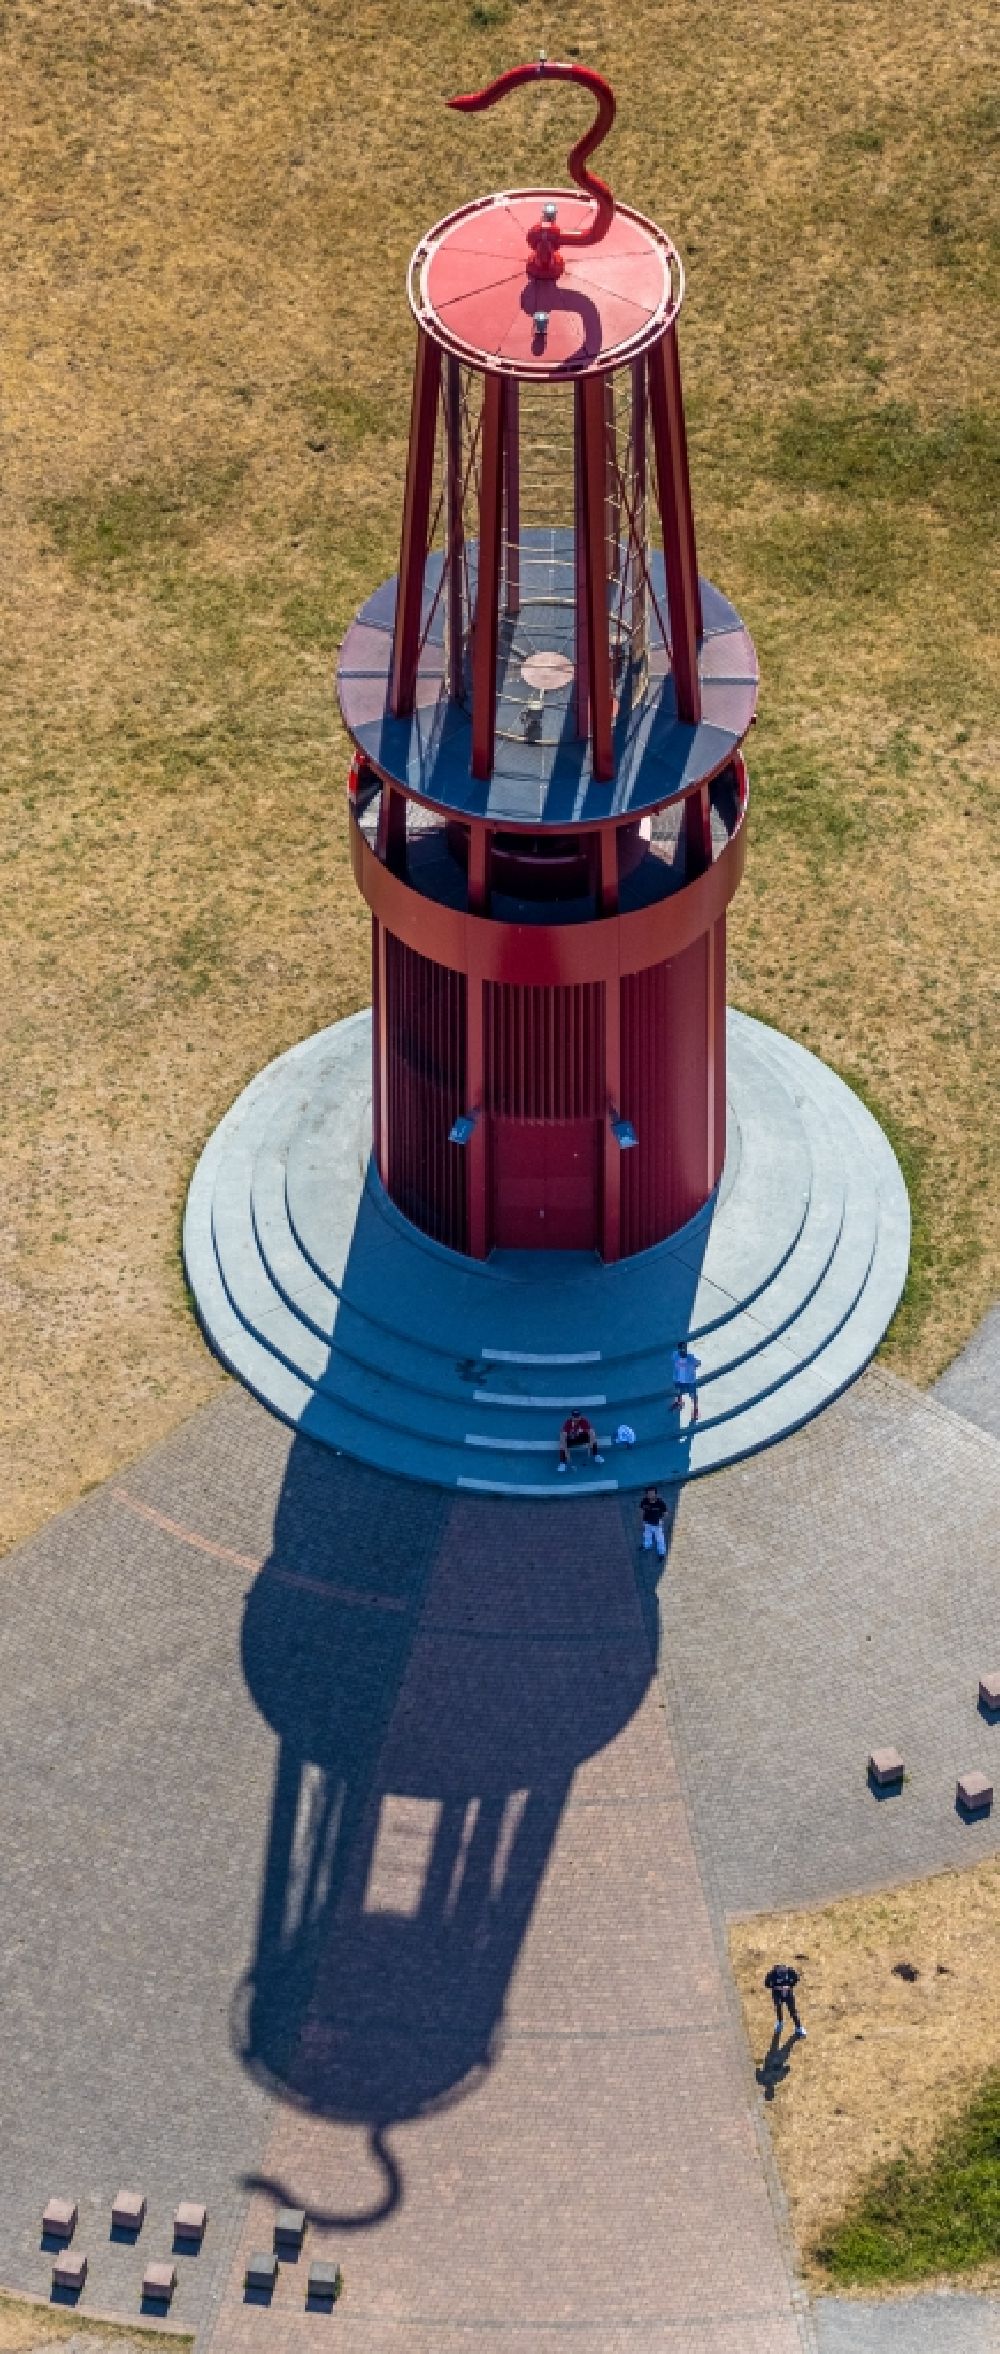 Aerial image Moers - Sculpture of an oversized red miner's lamp on the grounds of renatured Halde Rheinpreussen in Moers in North Rhine-Westphalia